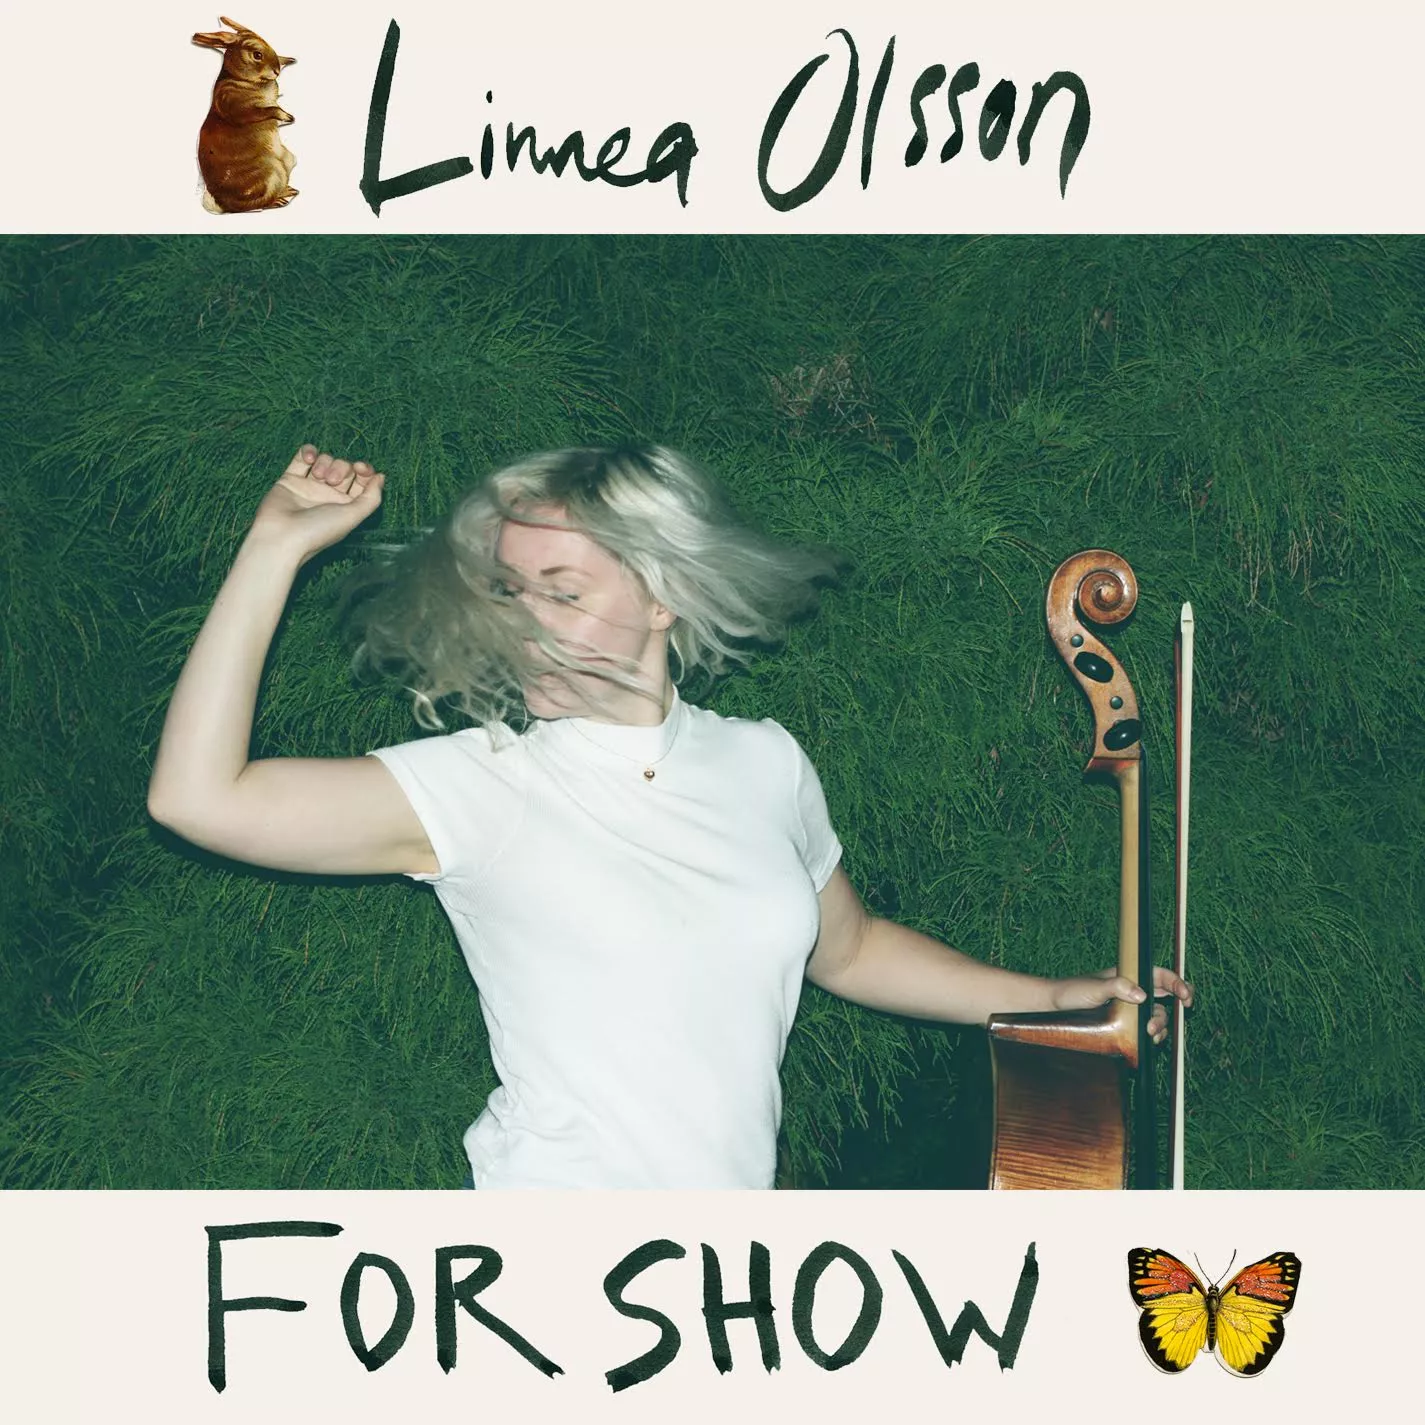 For Show - Linnea Olsson